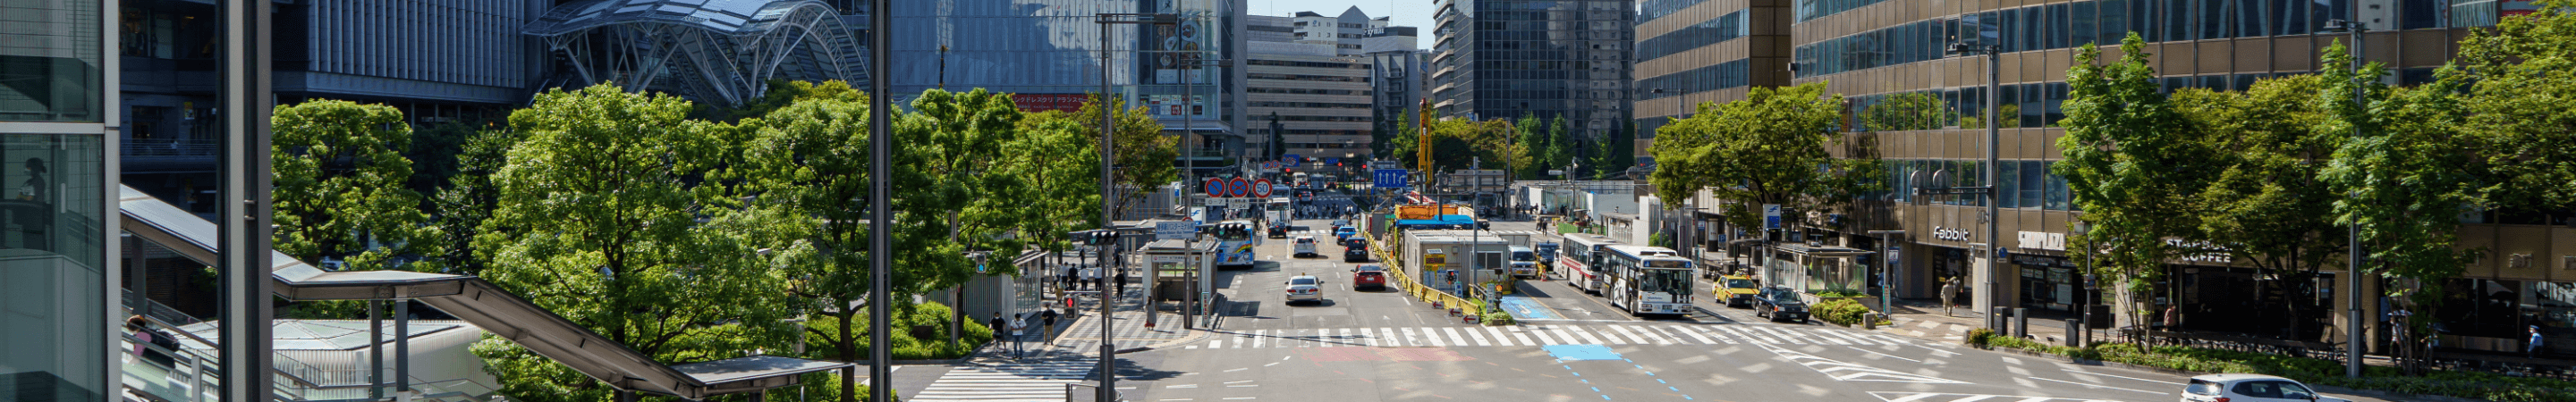 福岡市博多駅前の道路